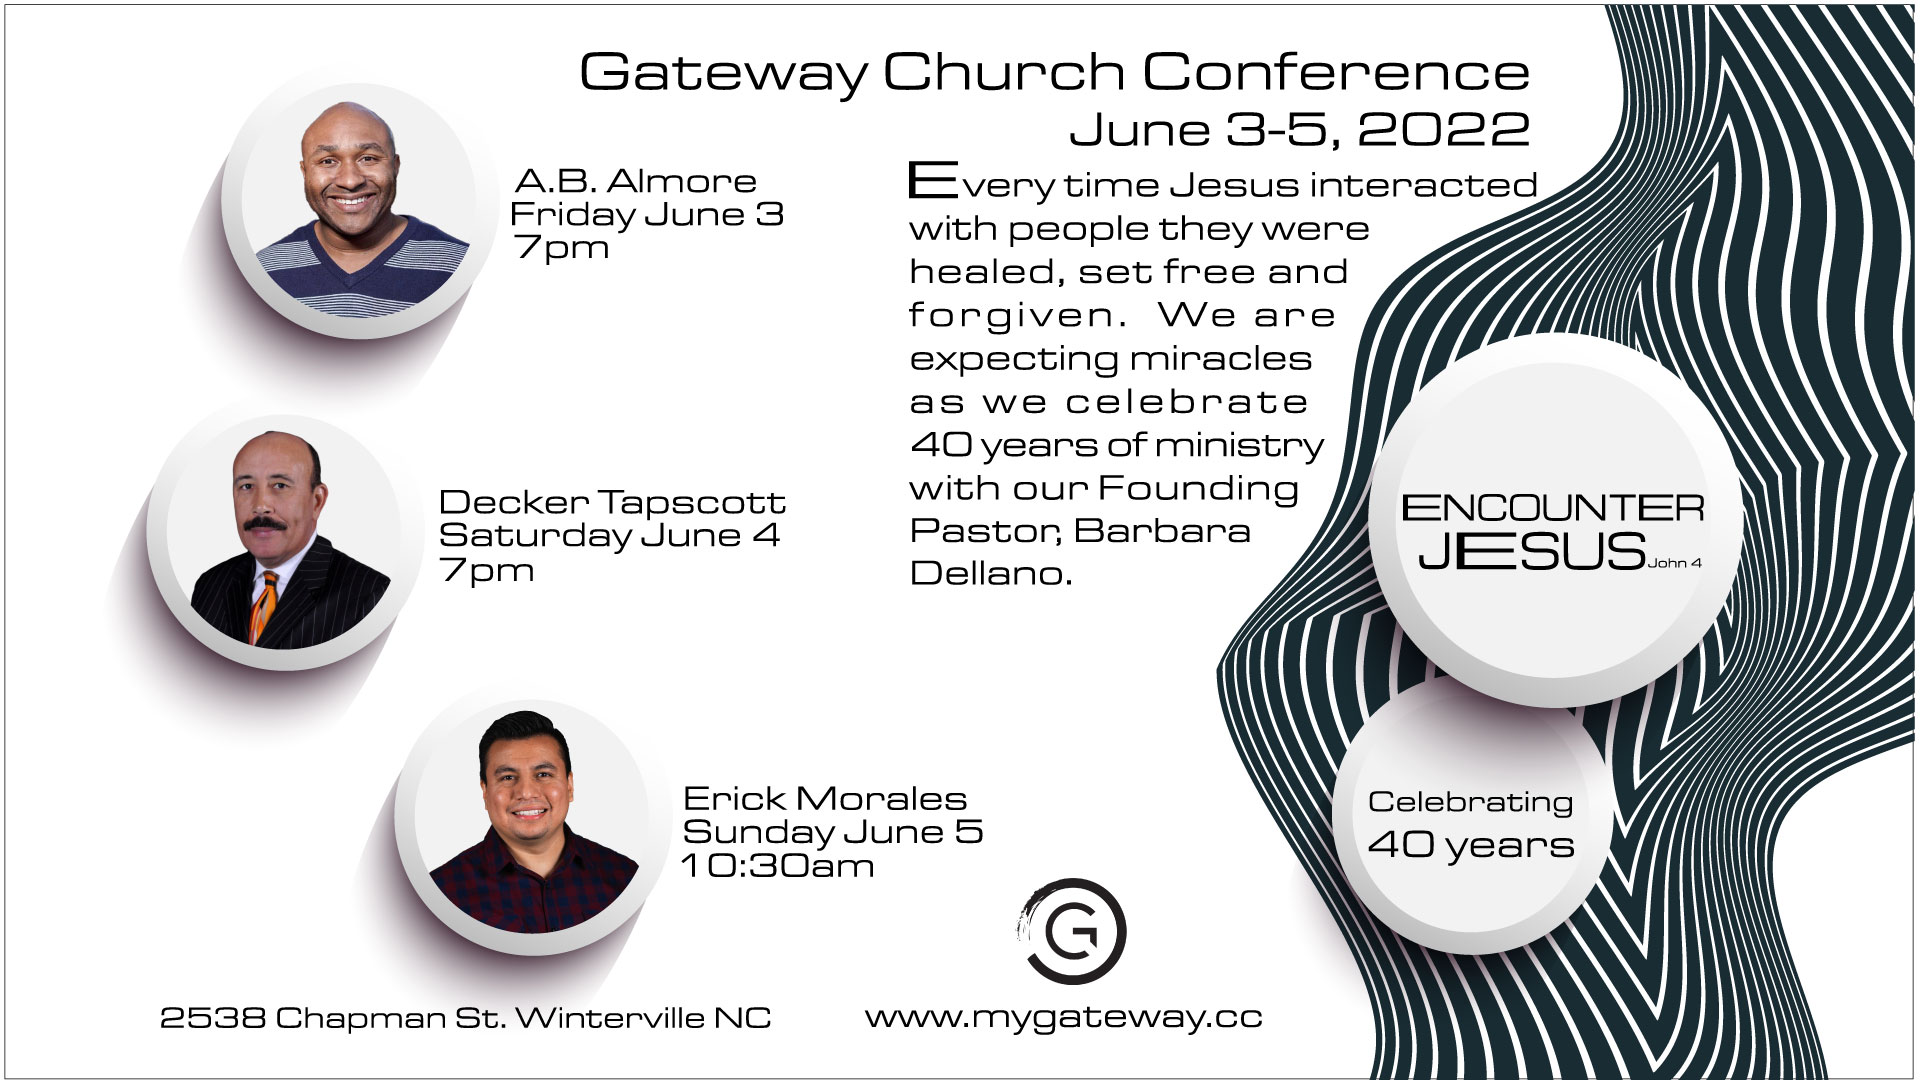 Encounter Jesus June Conferance - Gateway Church in Winterville,NC